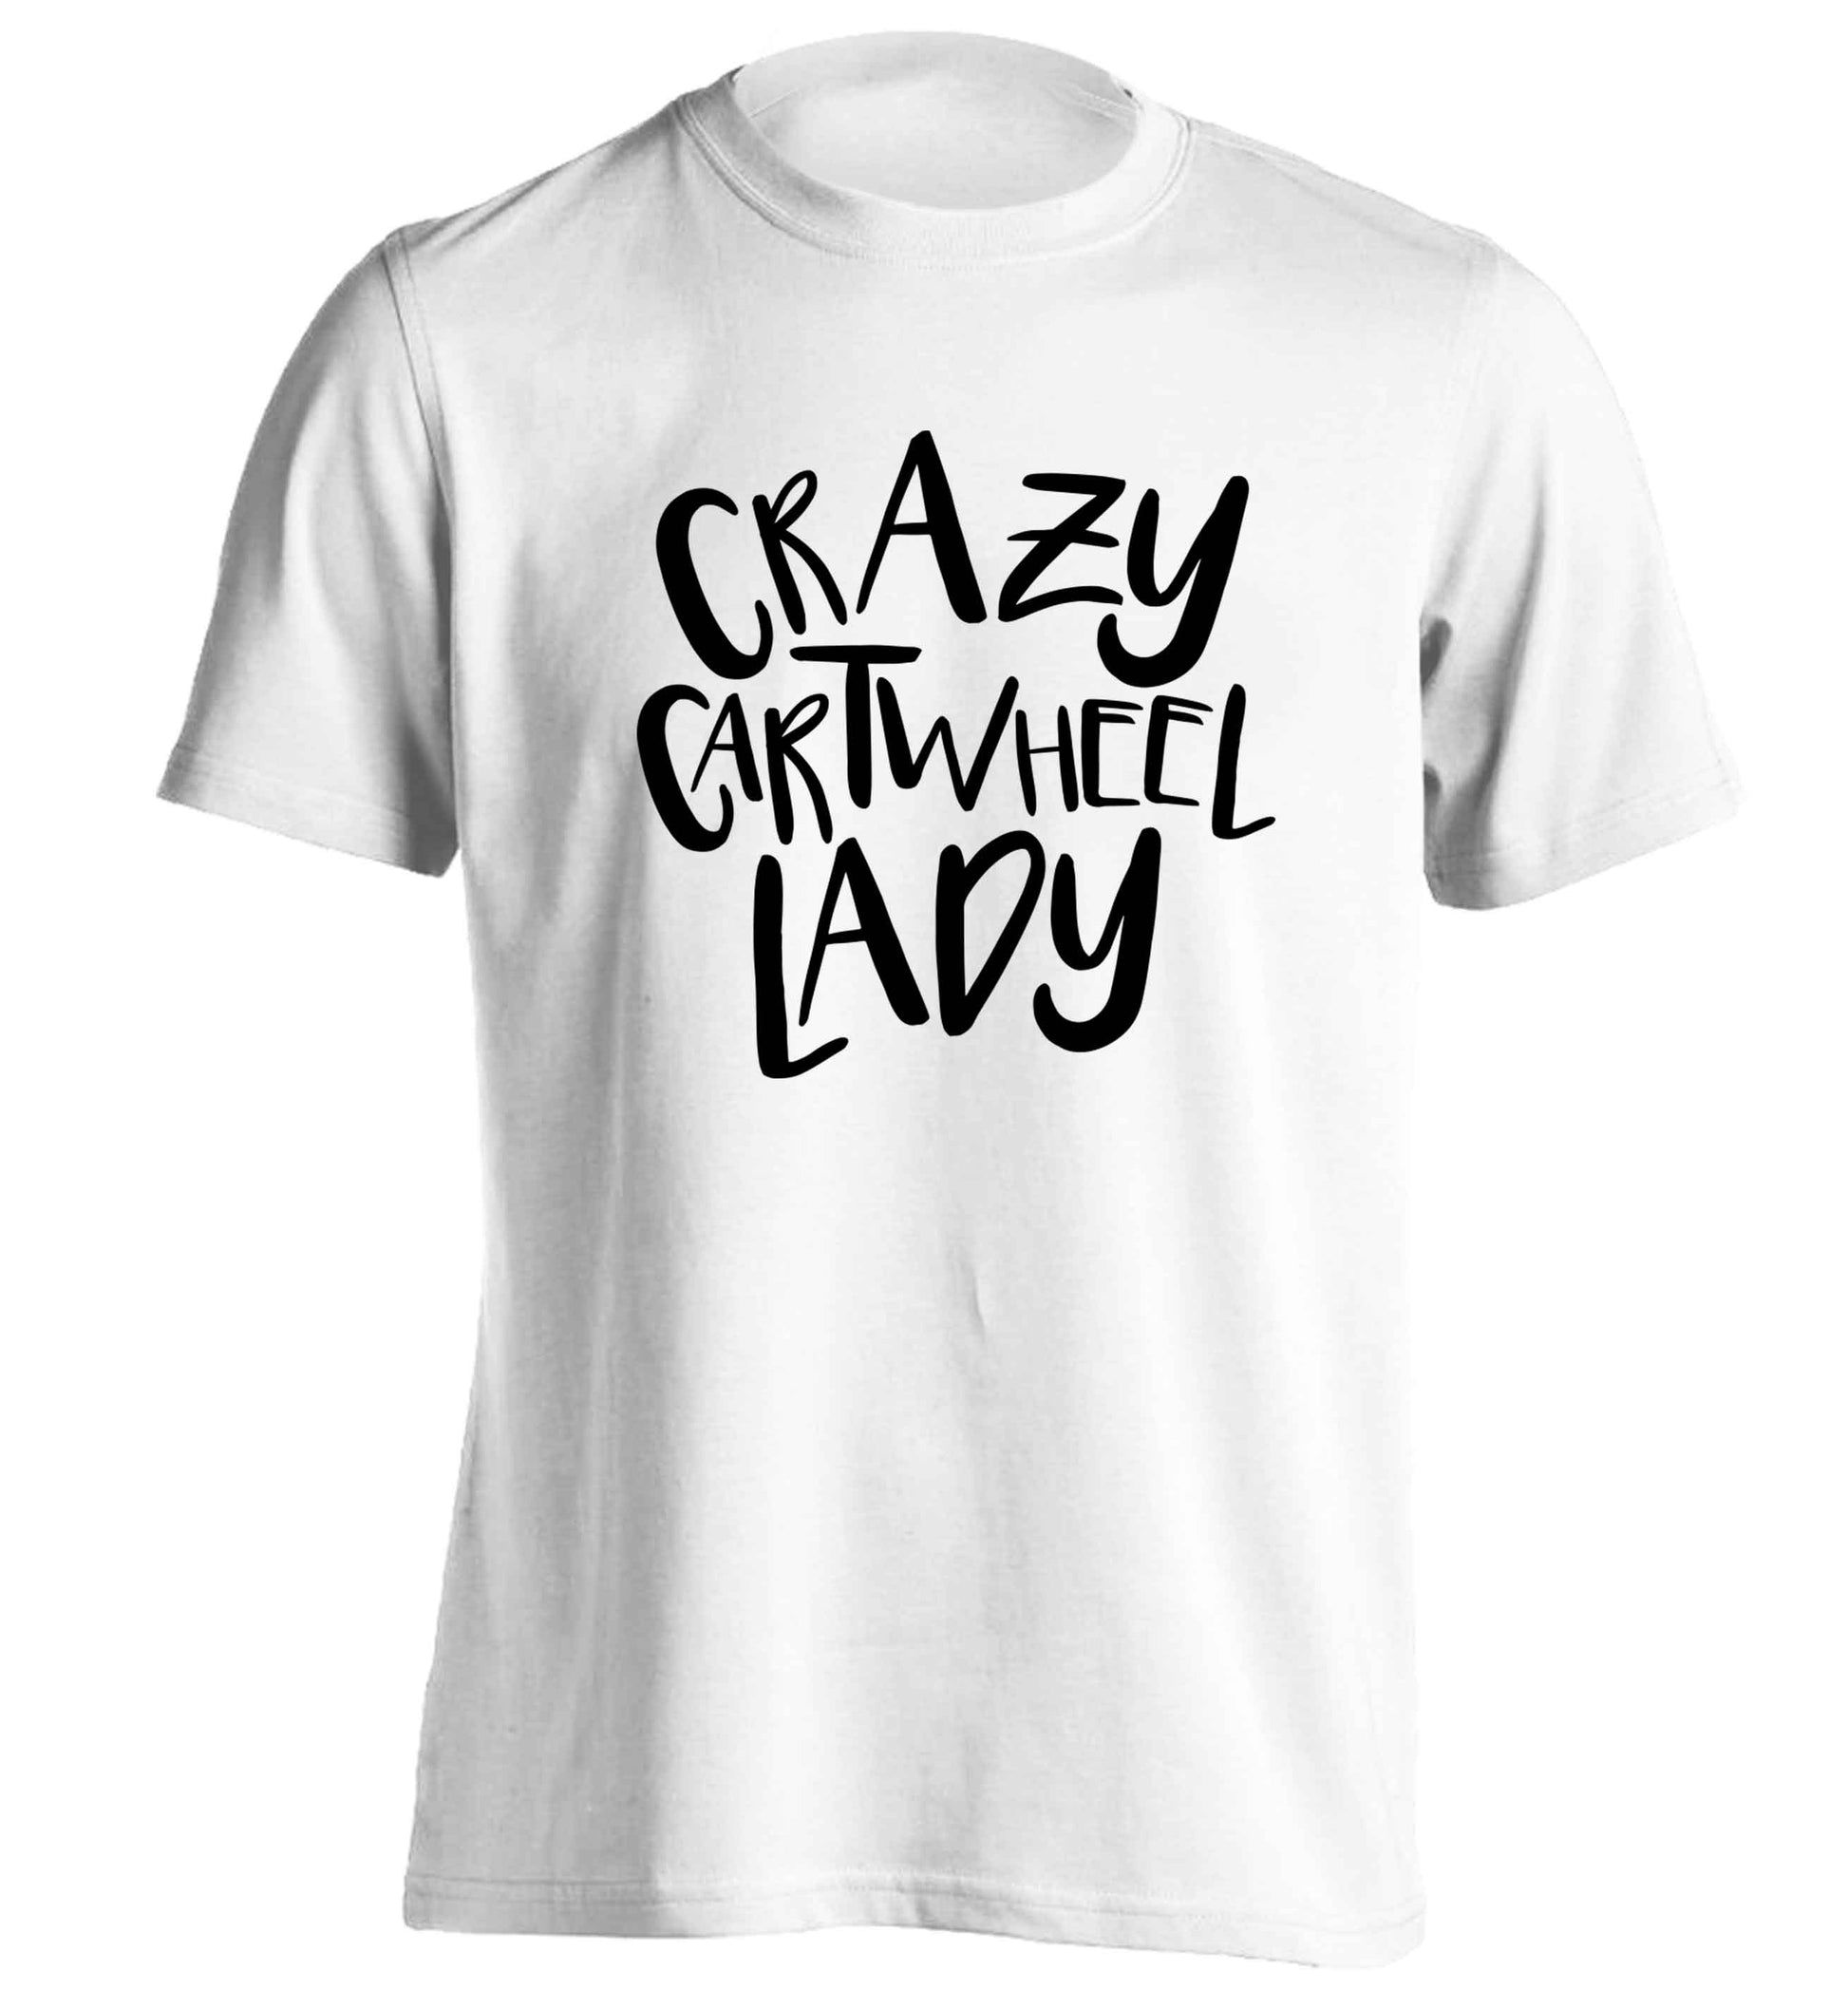 Crazy cartwheel lady adults unisex white Tshirt 2XL